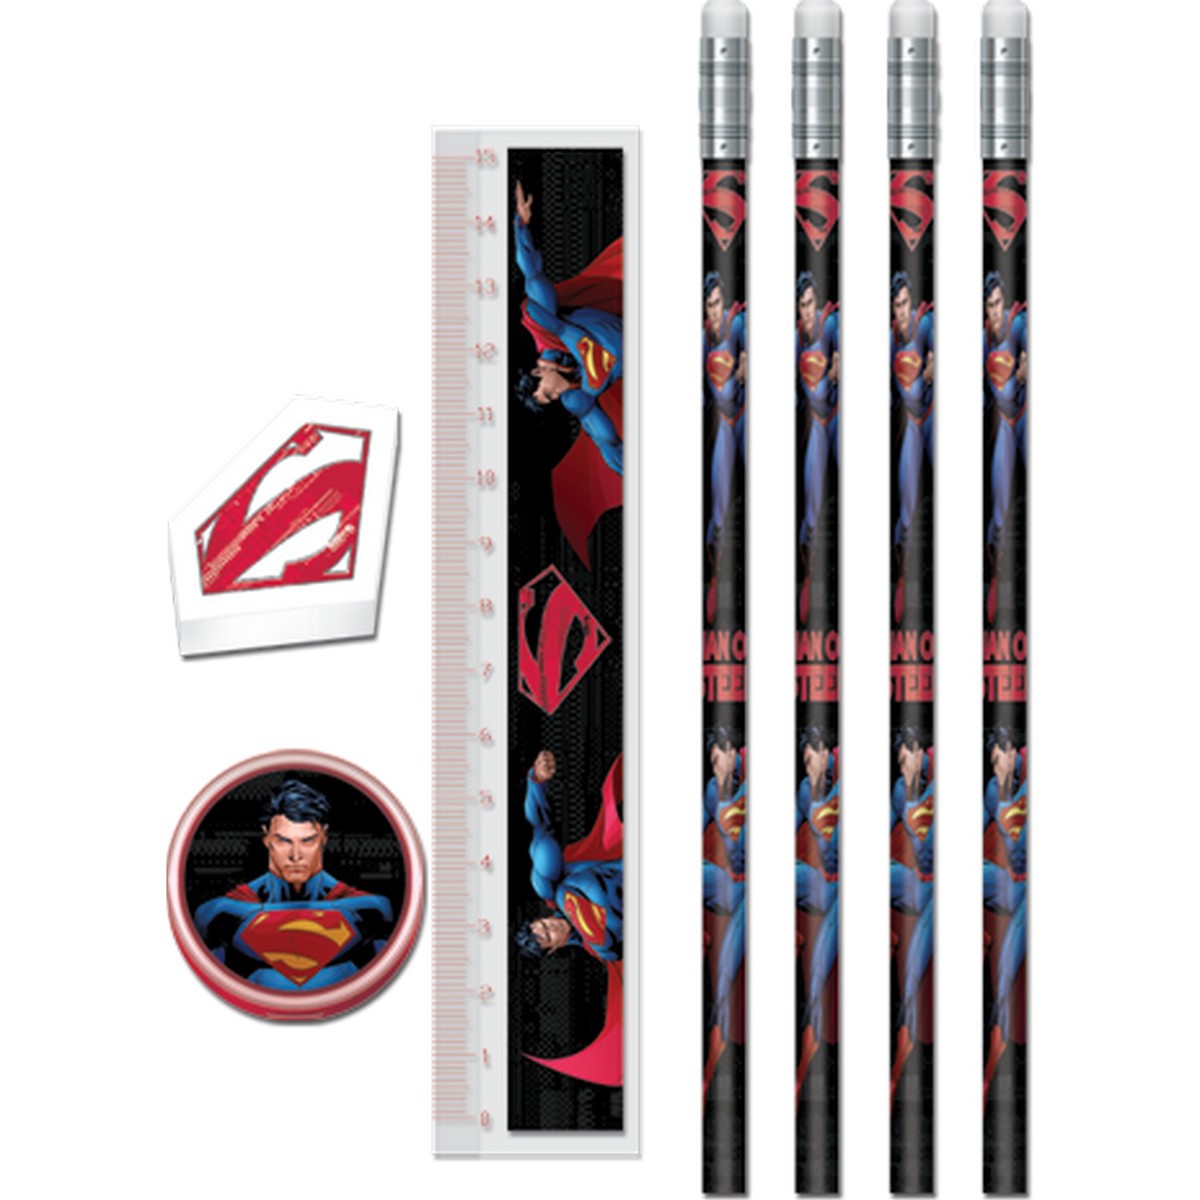 Superman School Trolley Value Pack Set 12in1 FK-100391 18inch